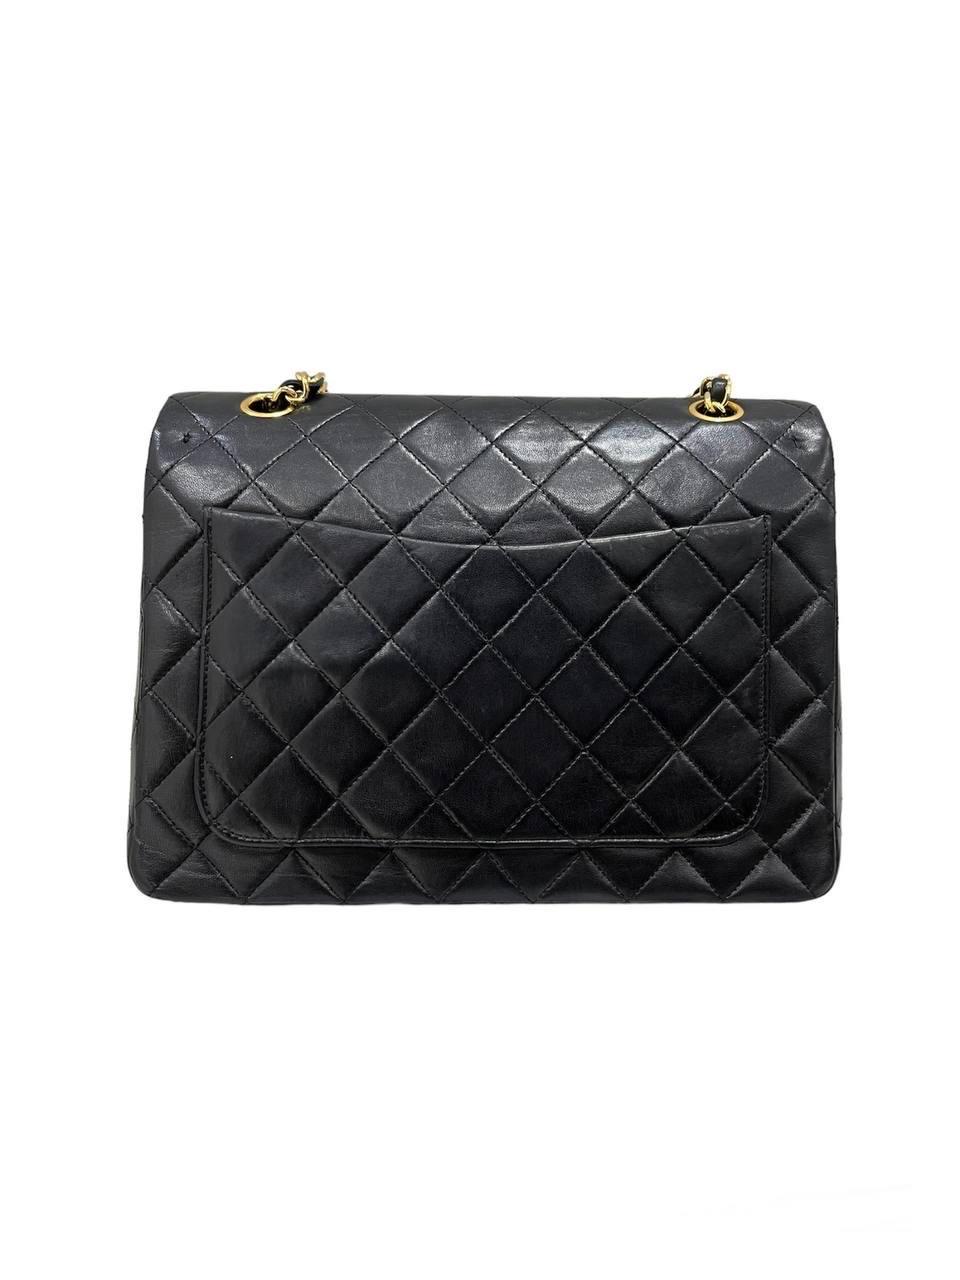  1989 Chanel Flap Black Leather Vintage Top Handle Bag 1